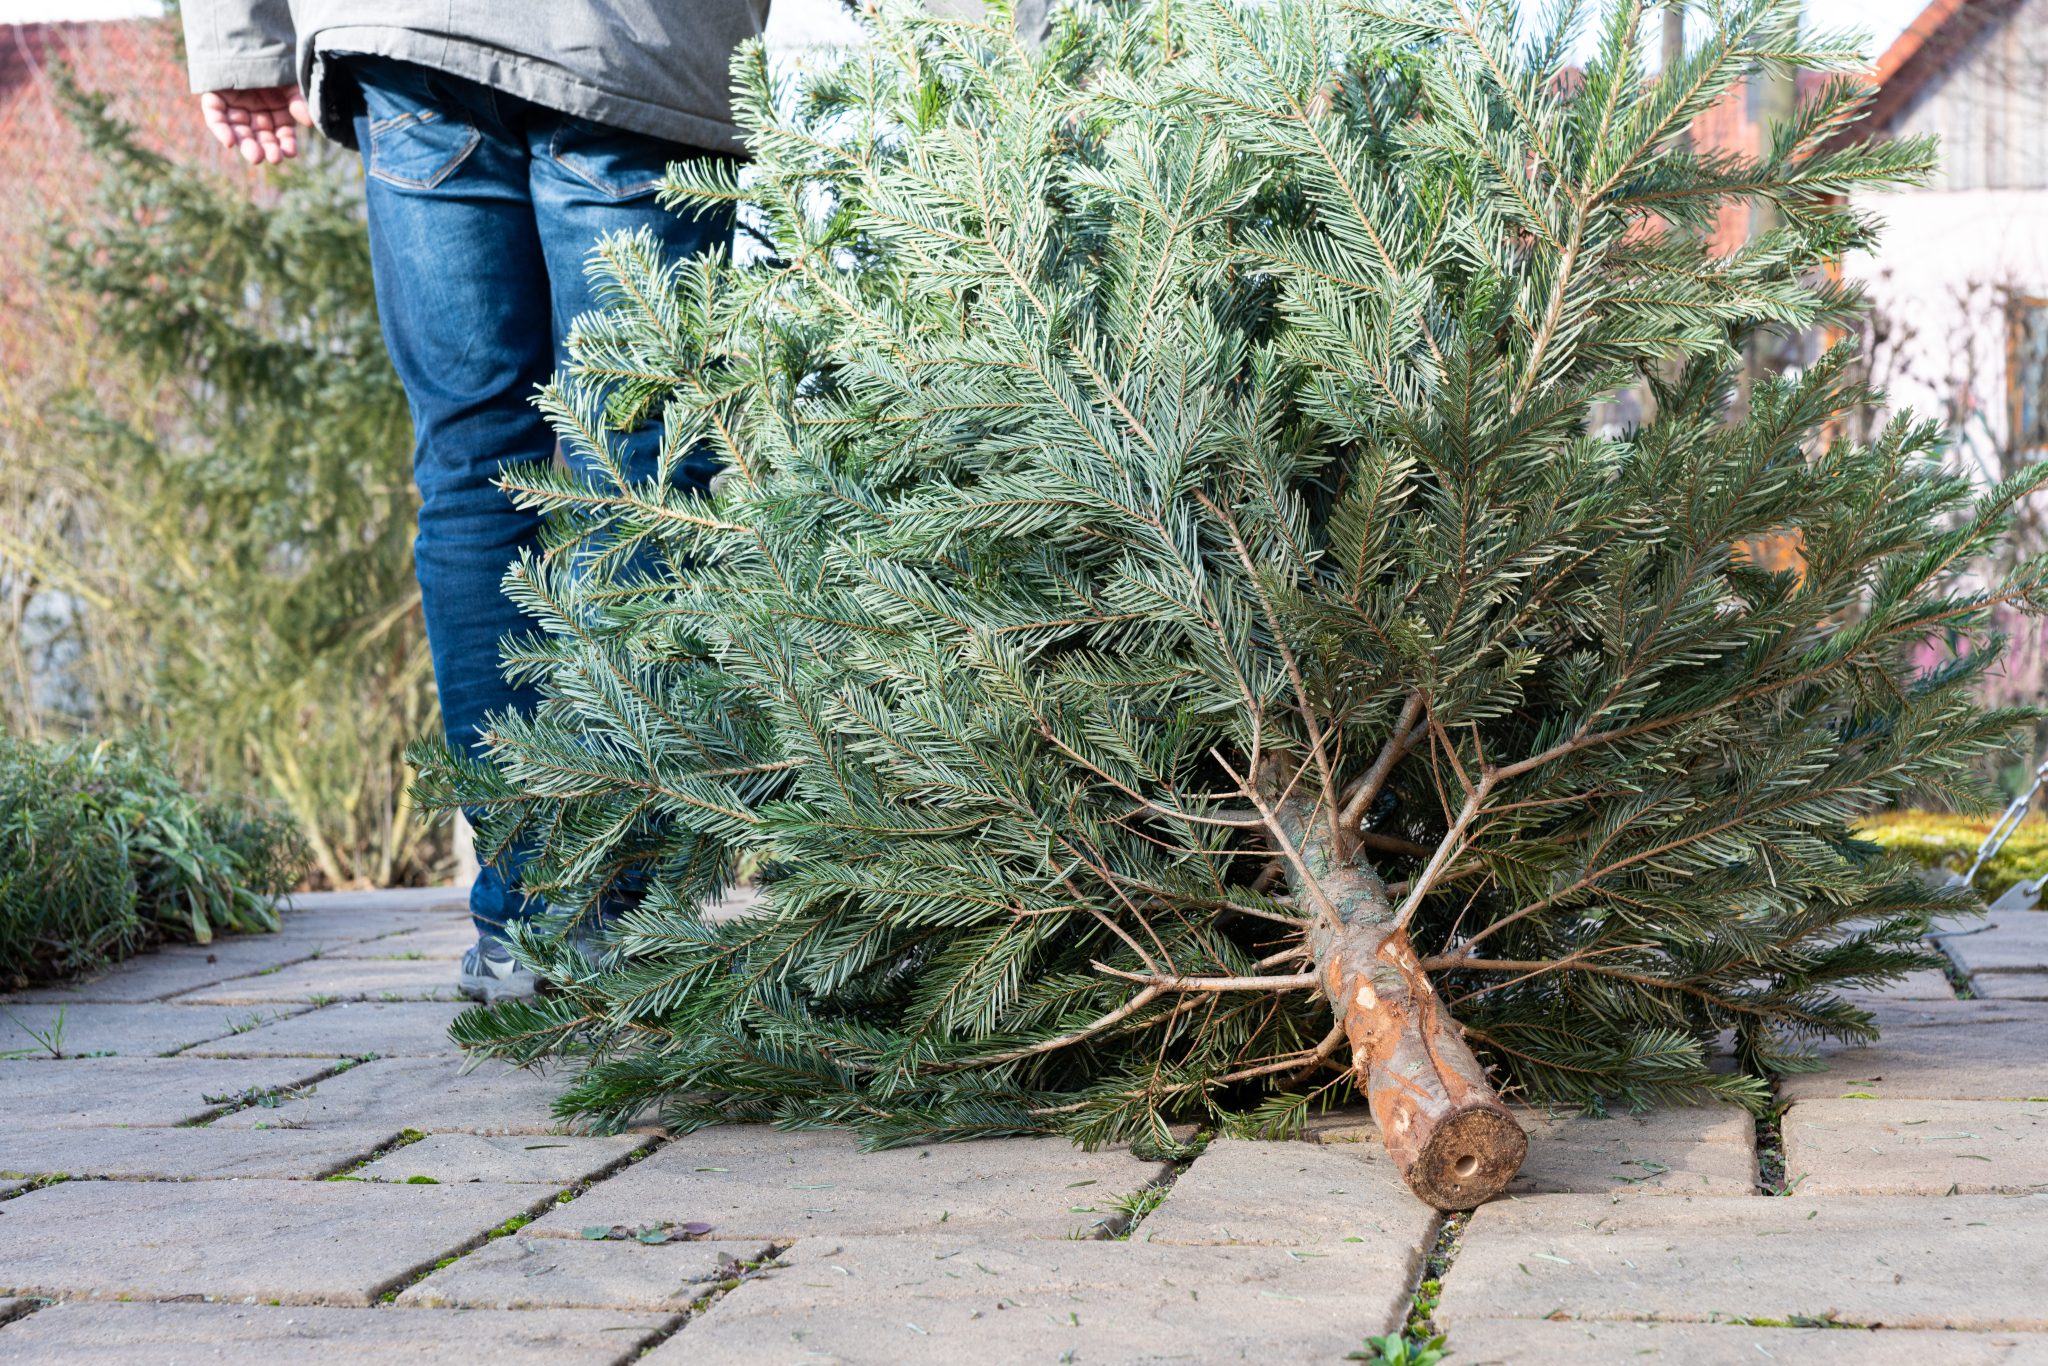 Man disposing of a Christmas tree